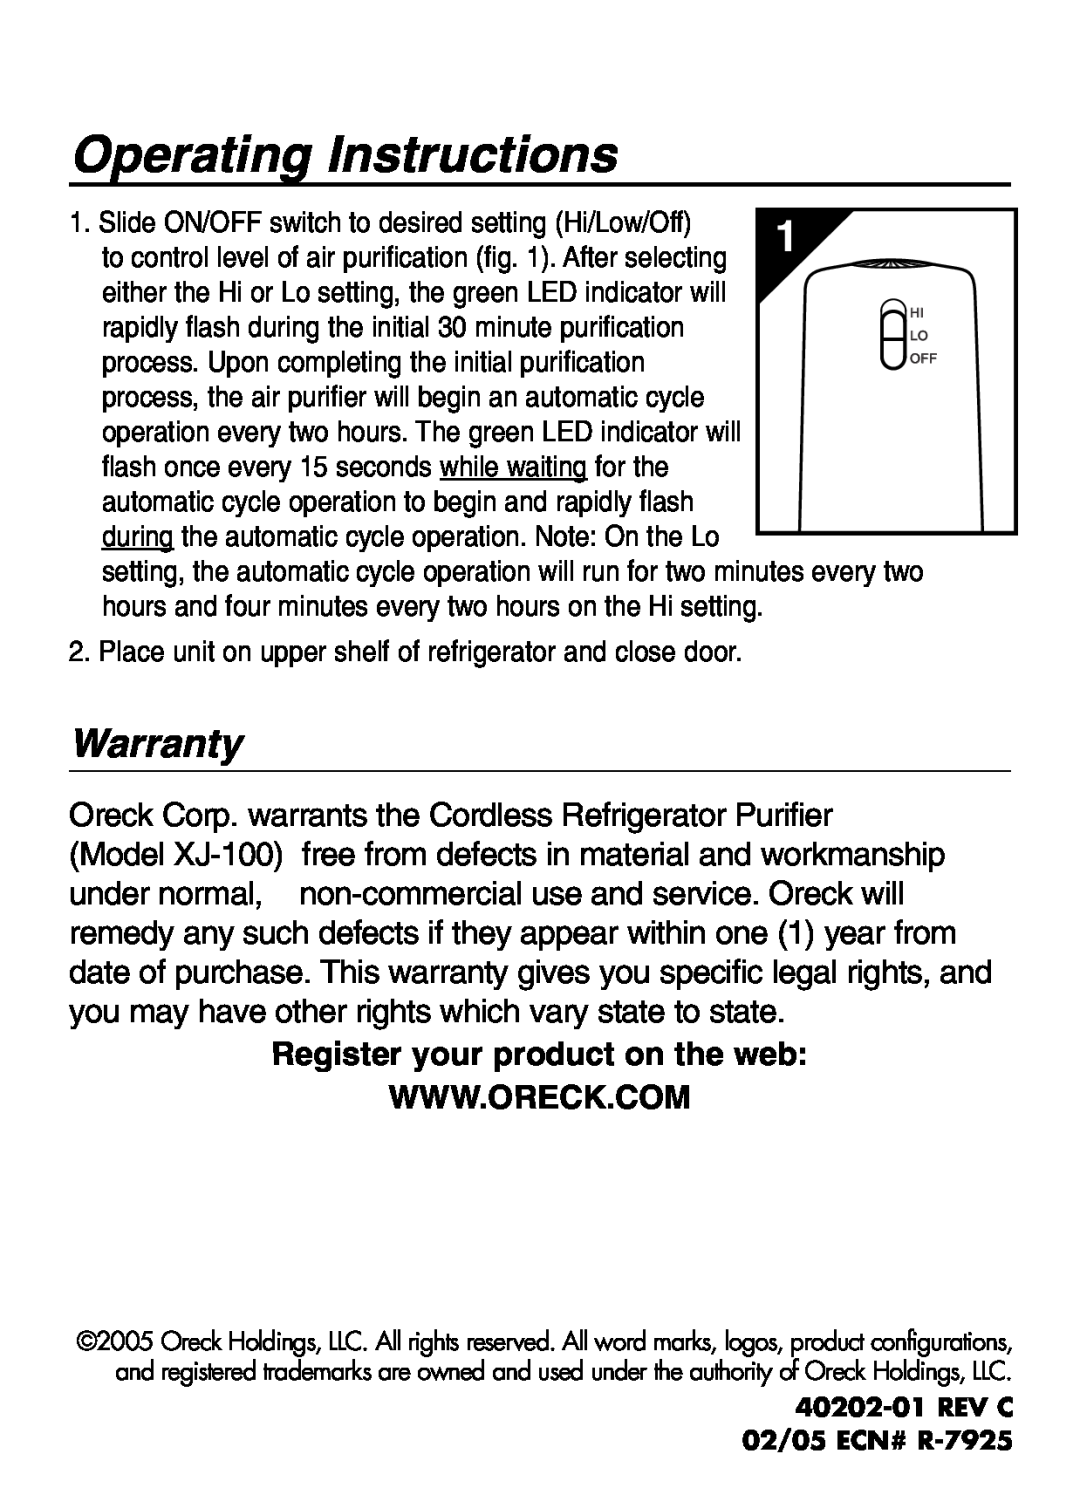 Oreck XJ-100 warranty Operating Instructions, Warranty 